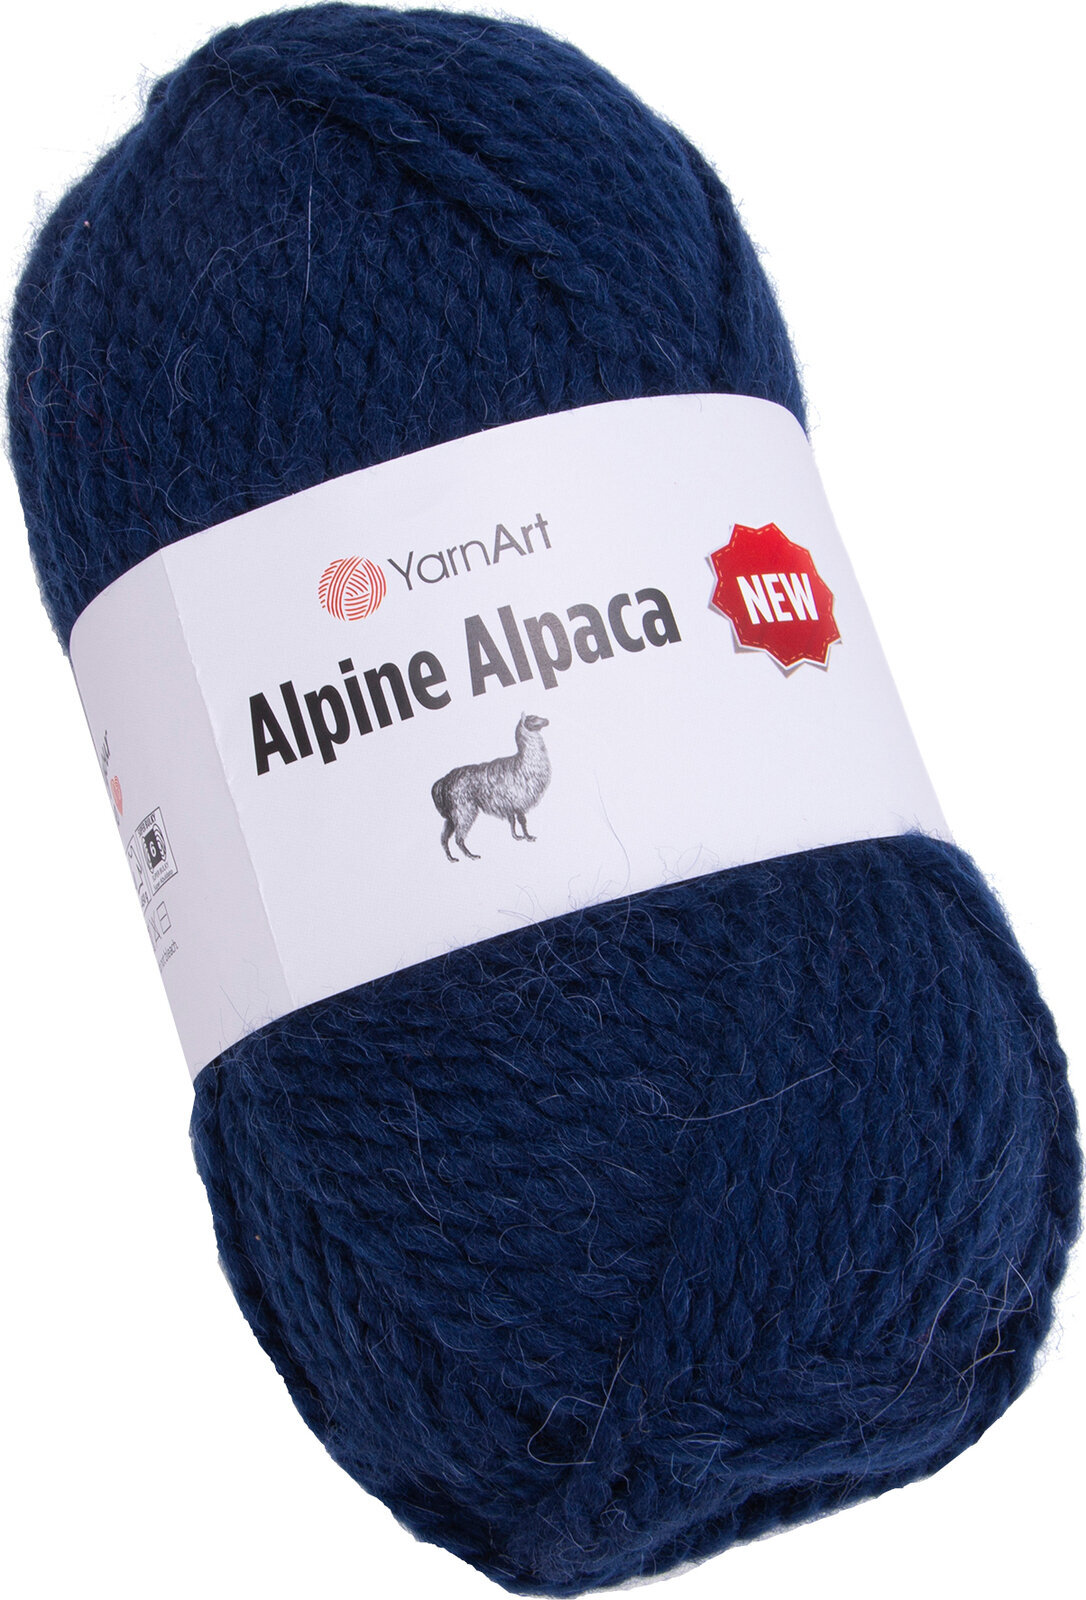 Strickgarn Yarn Art Alpine Alpaca New 1437